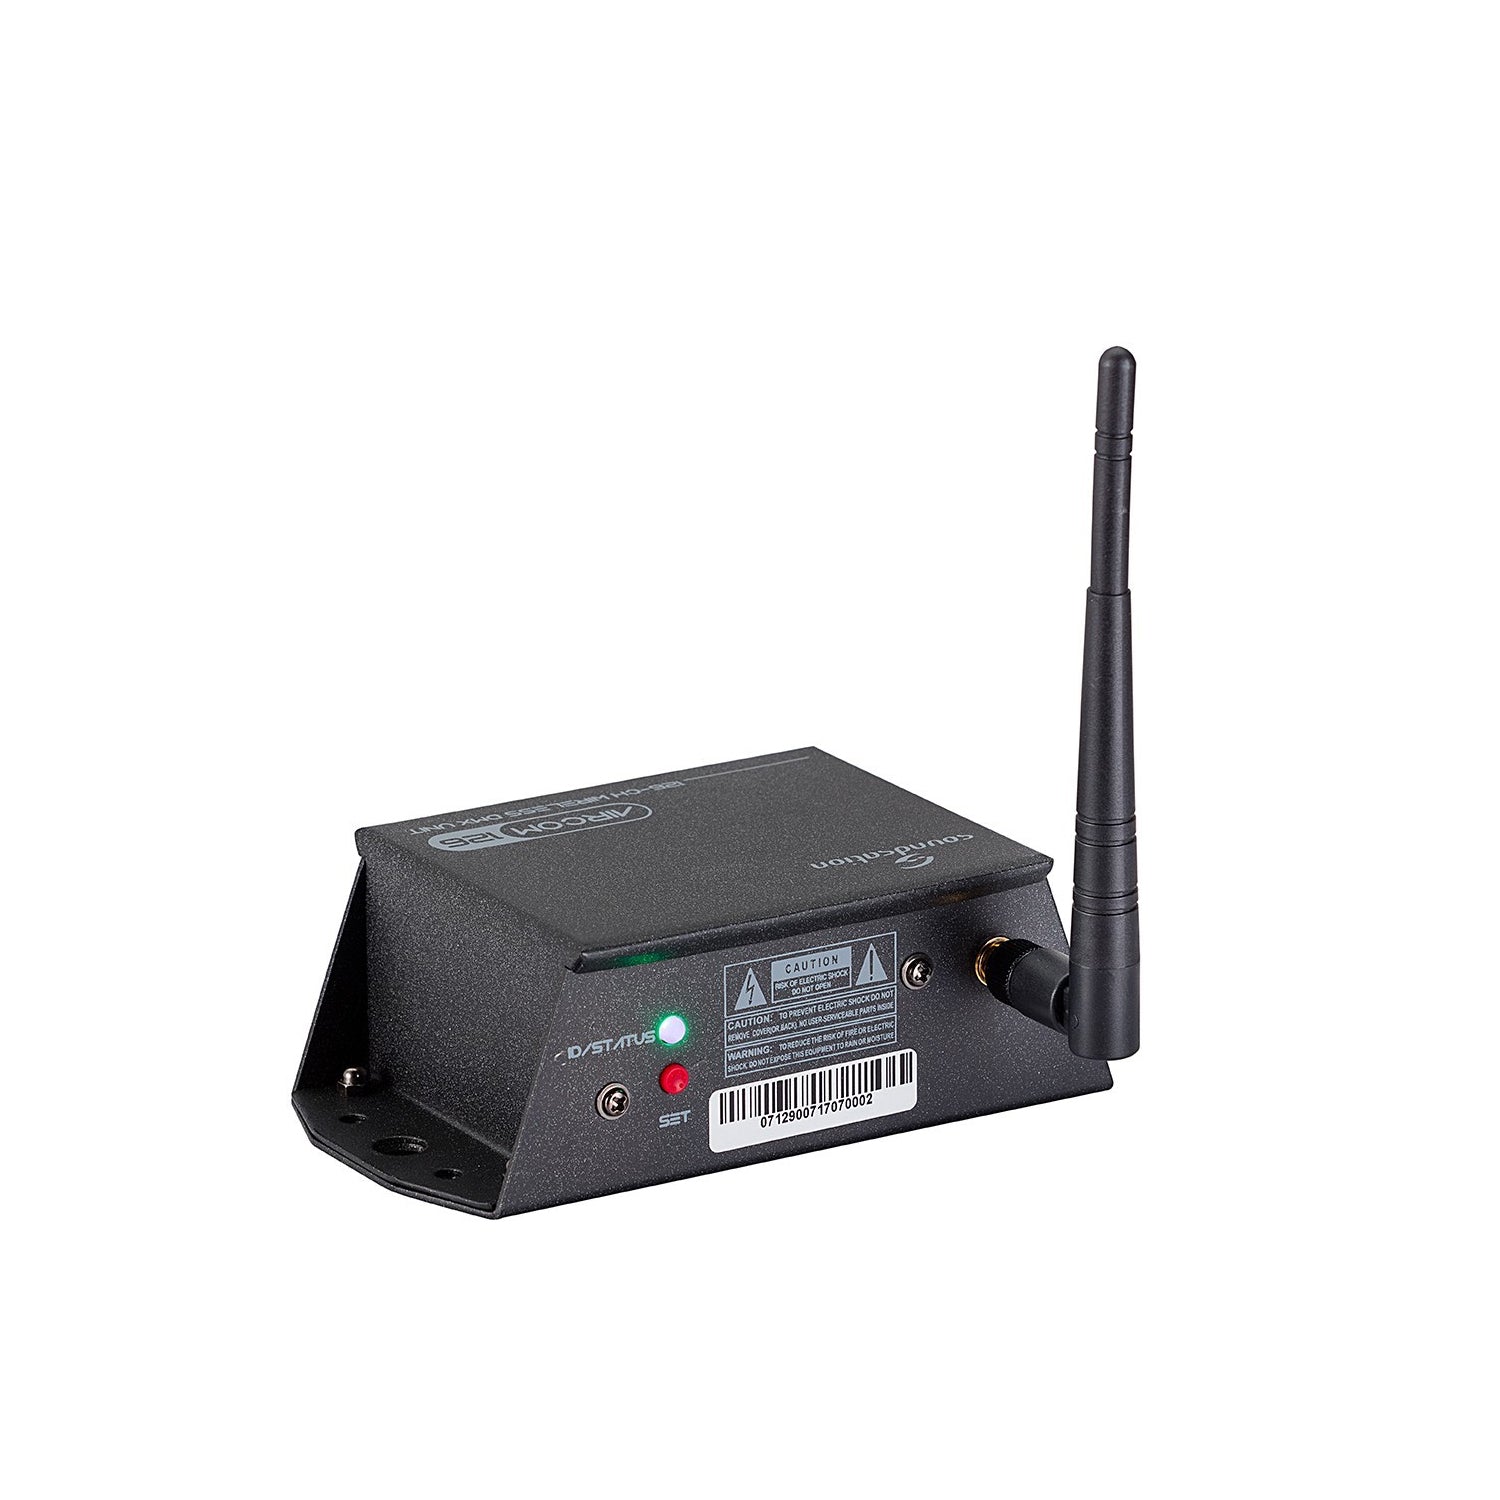 Centolight Aircom 126 2.4Ghz 126 Channel Wireless DMX Unit